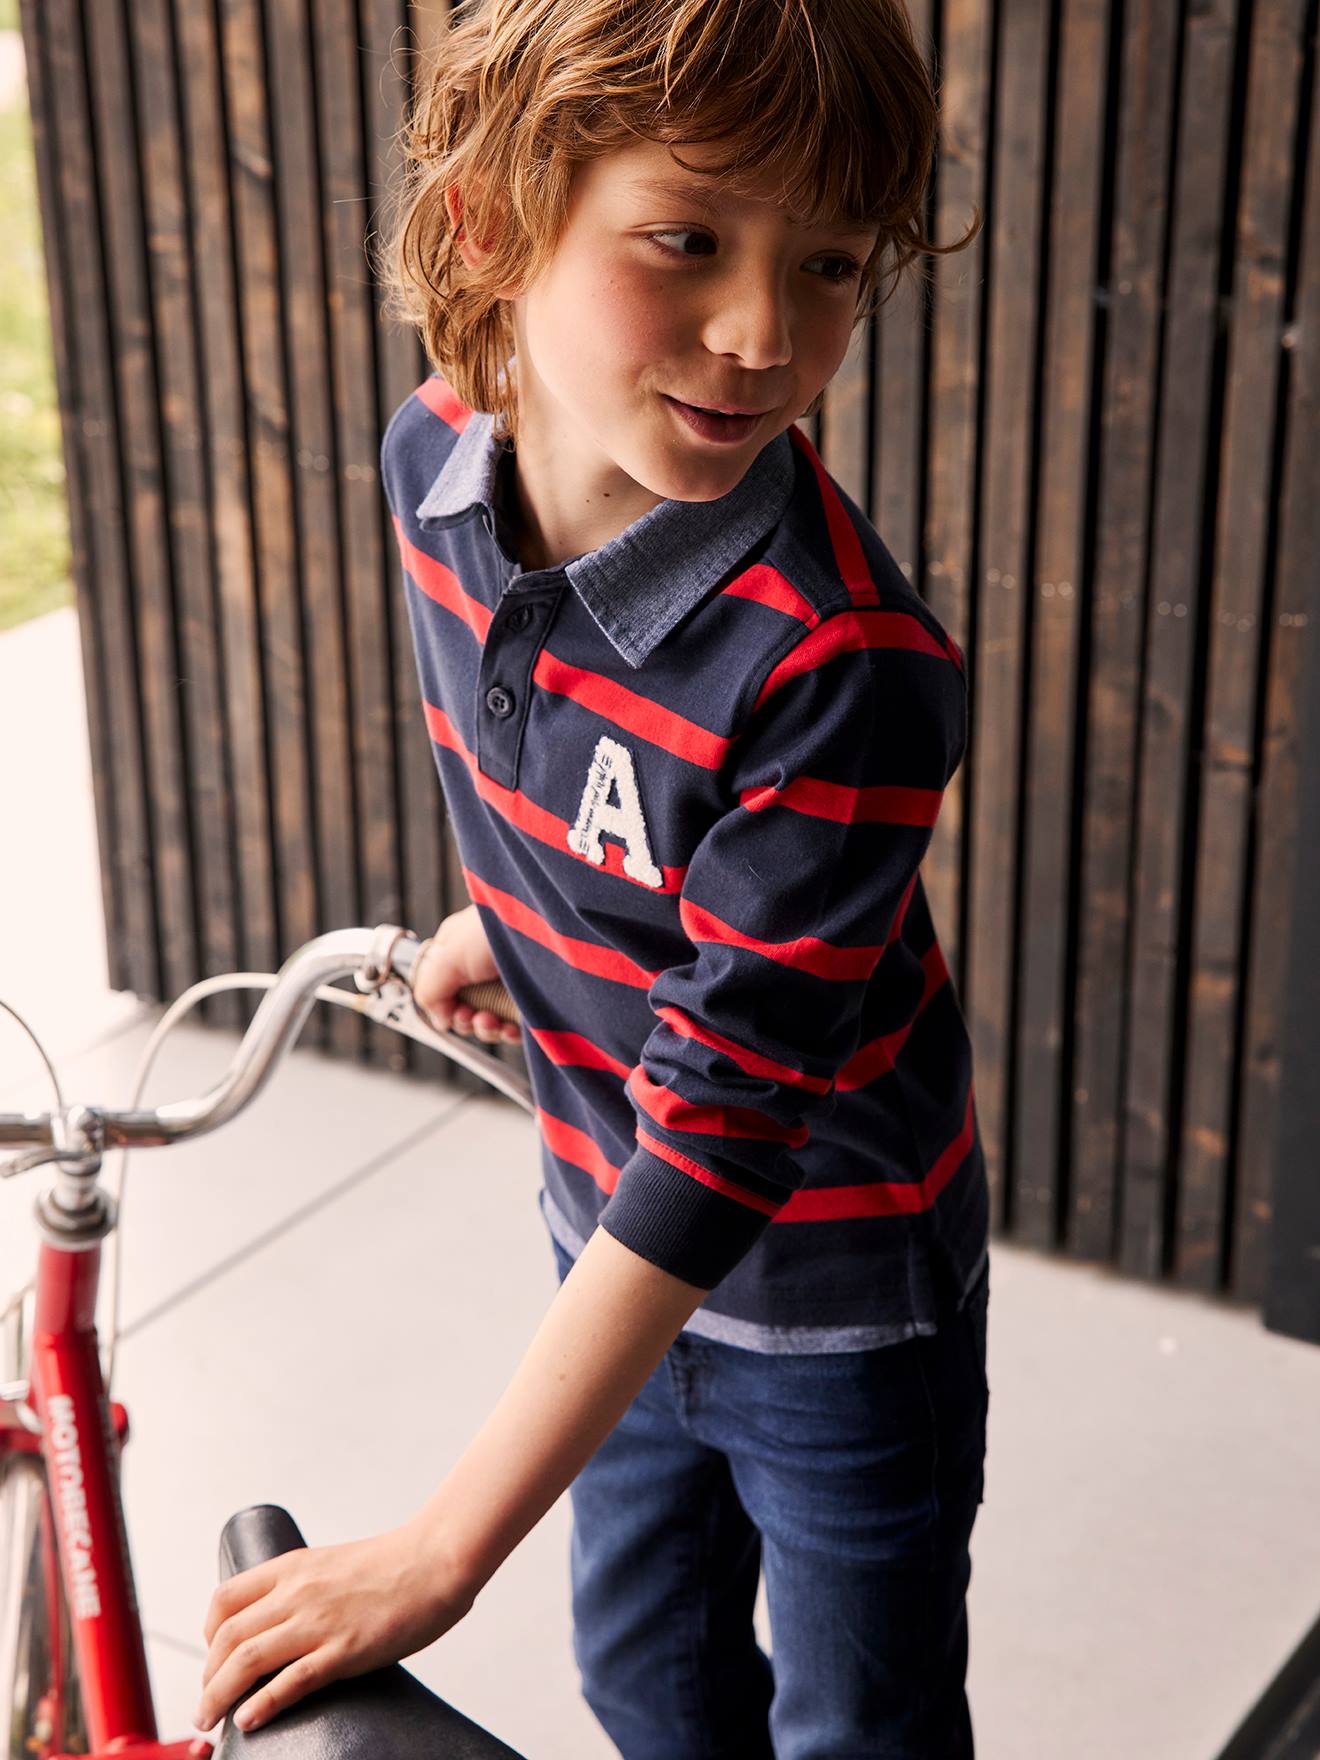 Toddler Boys Cotton Polo Shirts Summer T-Shirt Fashion Tee 2T~6 Years Kids Tops 